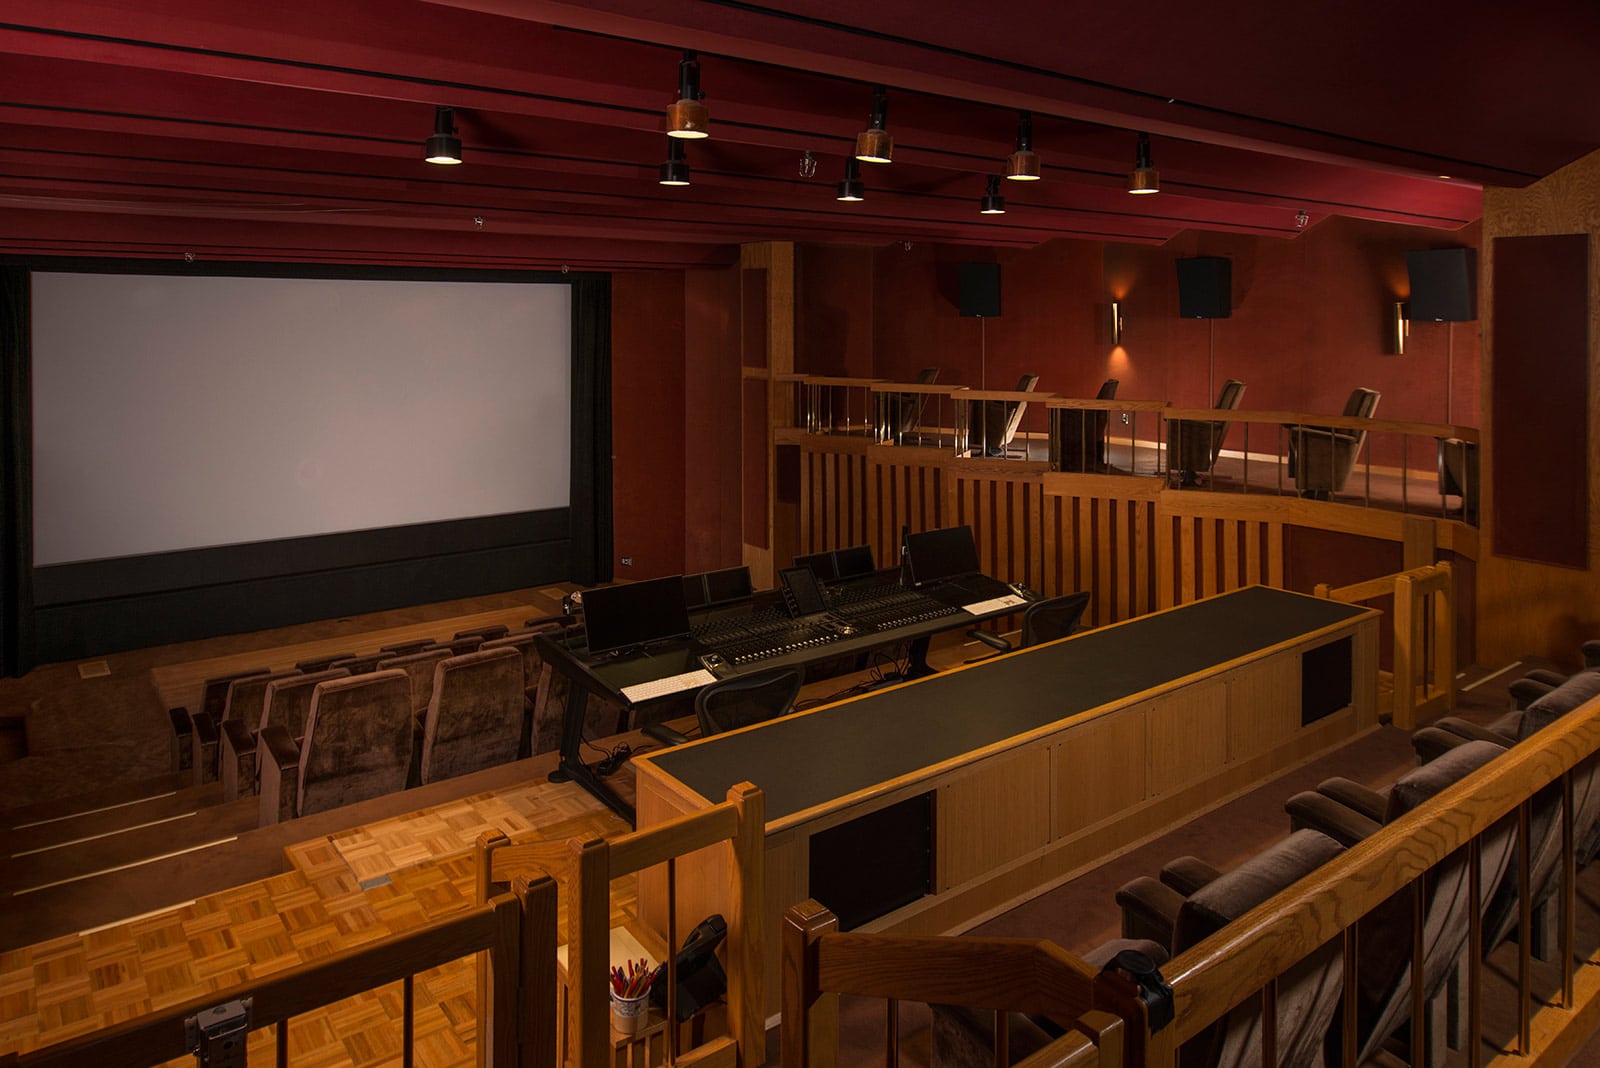 Historic Fantasy Film Center Reopens After Major Refurbishment with Meyer Sound Cinema System